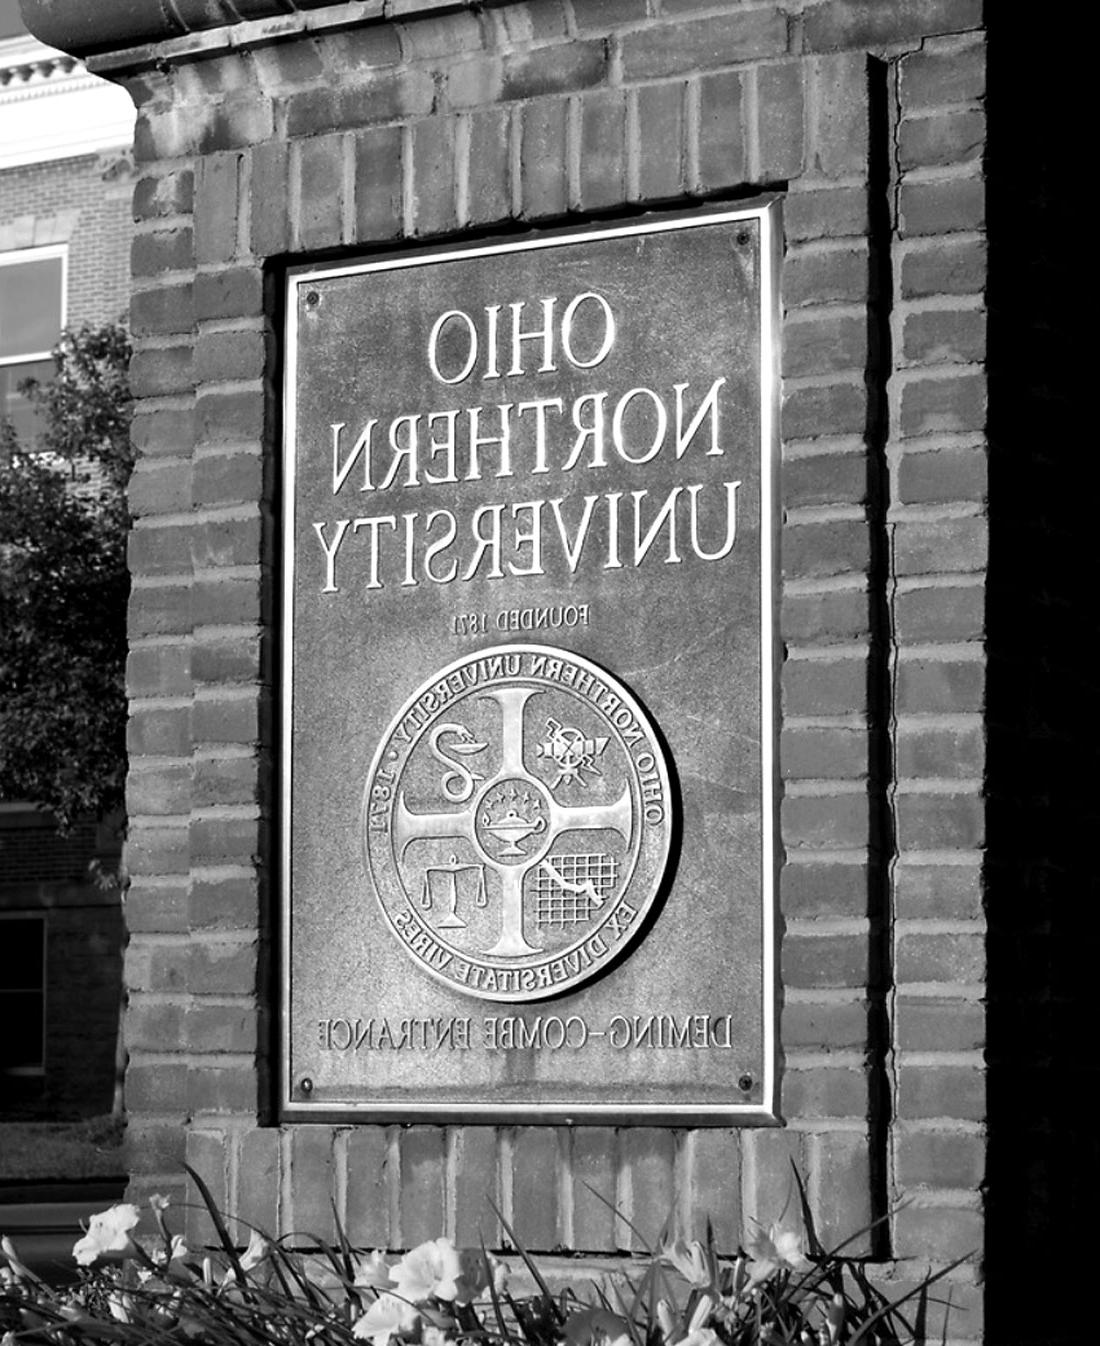 Ohio Northern University sign.